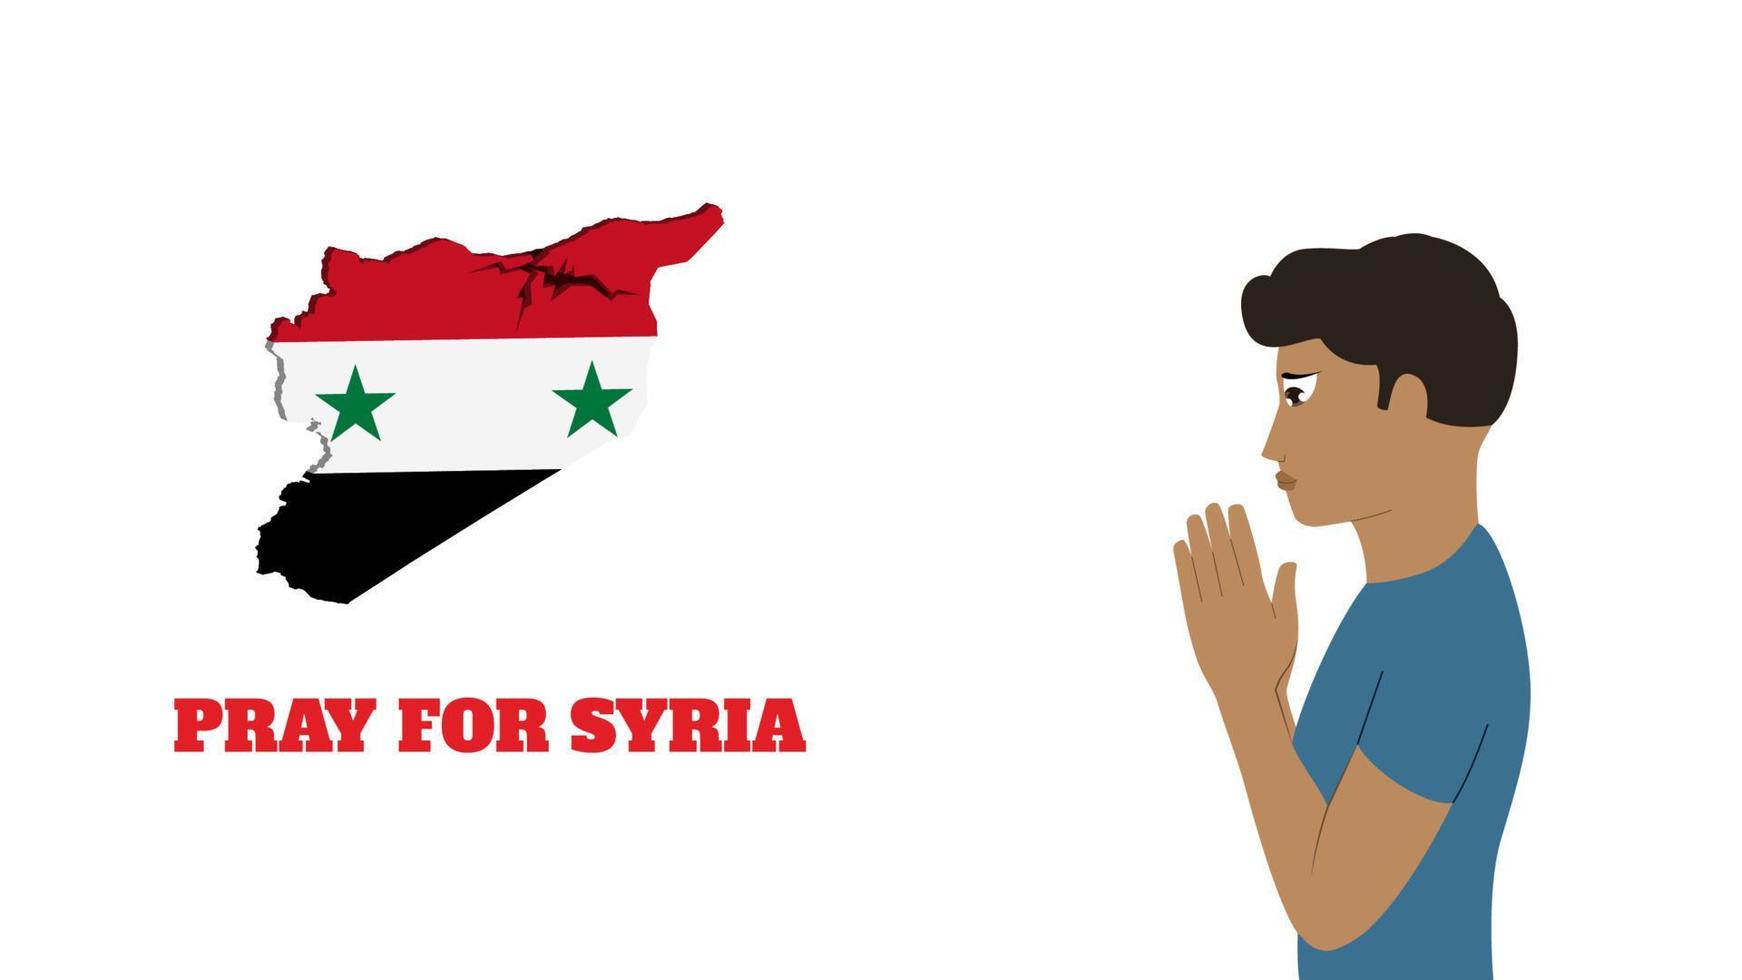 pray for Syria, a man praying vector illustration.